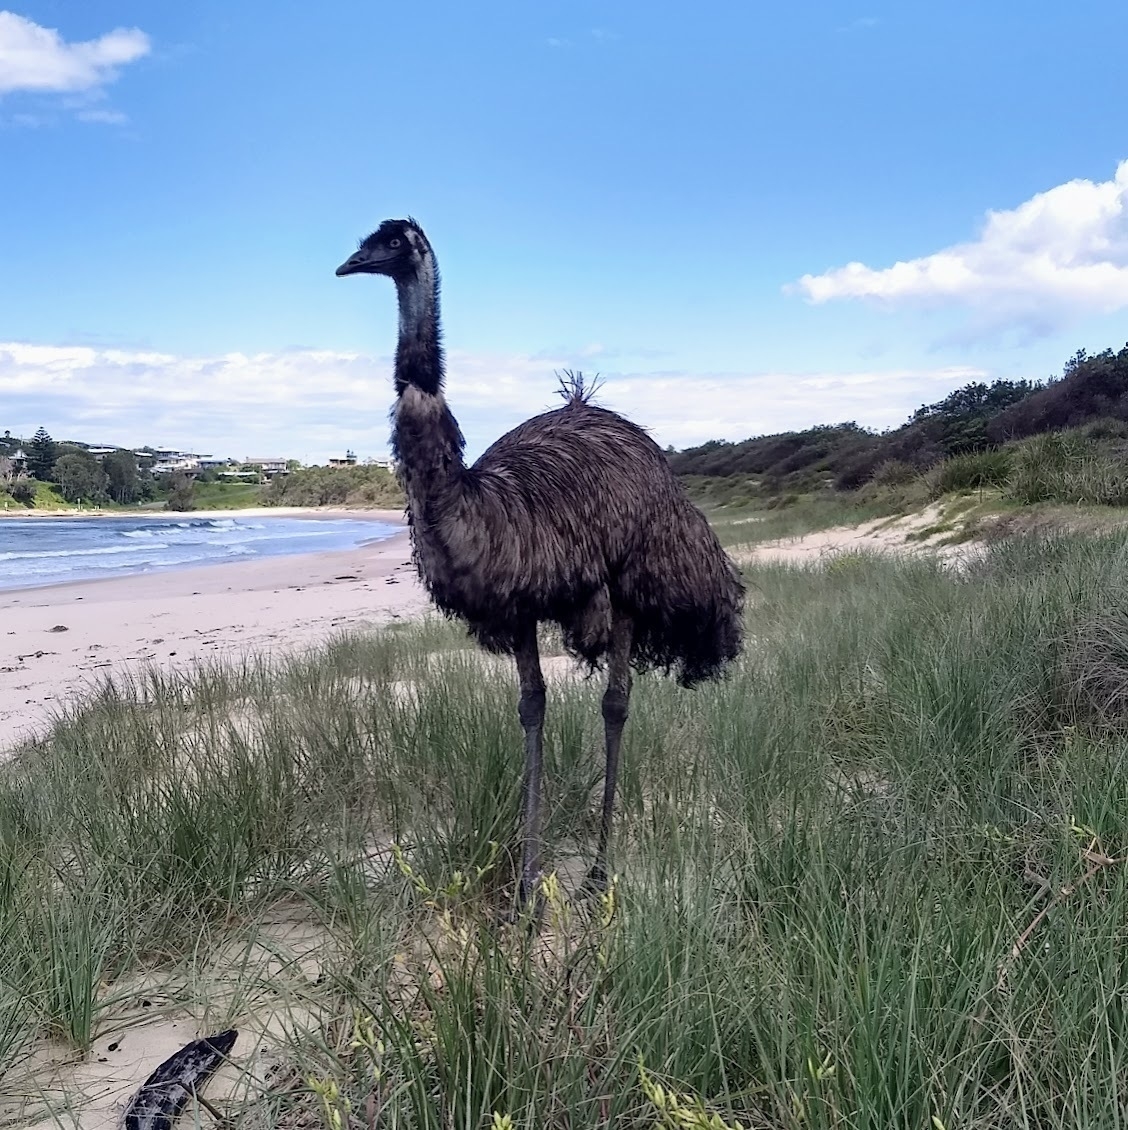 A flightless emu stands on the fore-dune of an Australian beach, apparently gazing towards the ocean